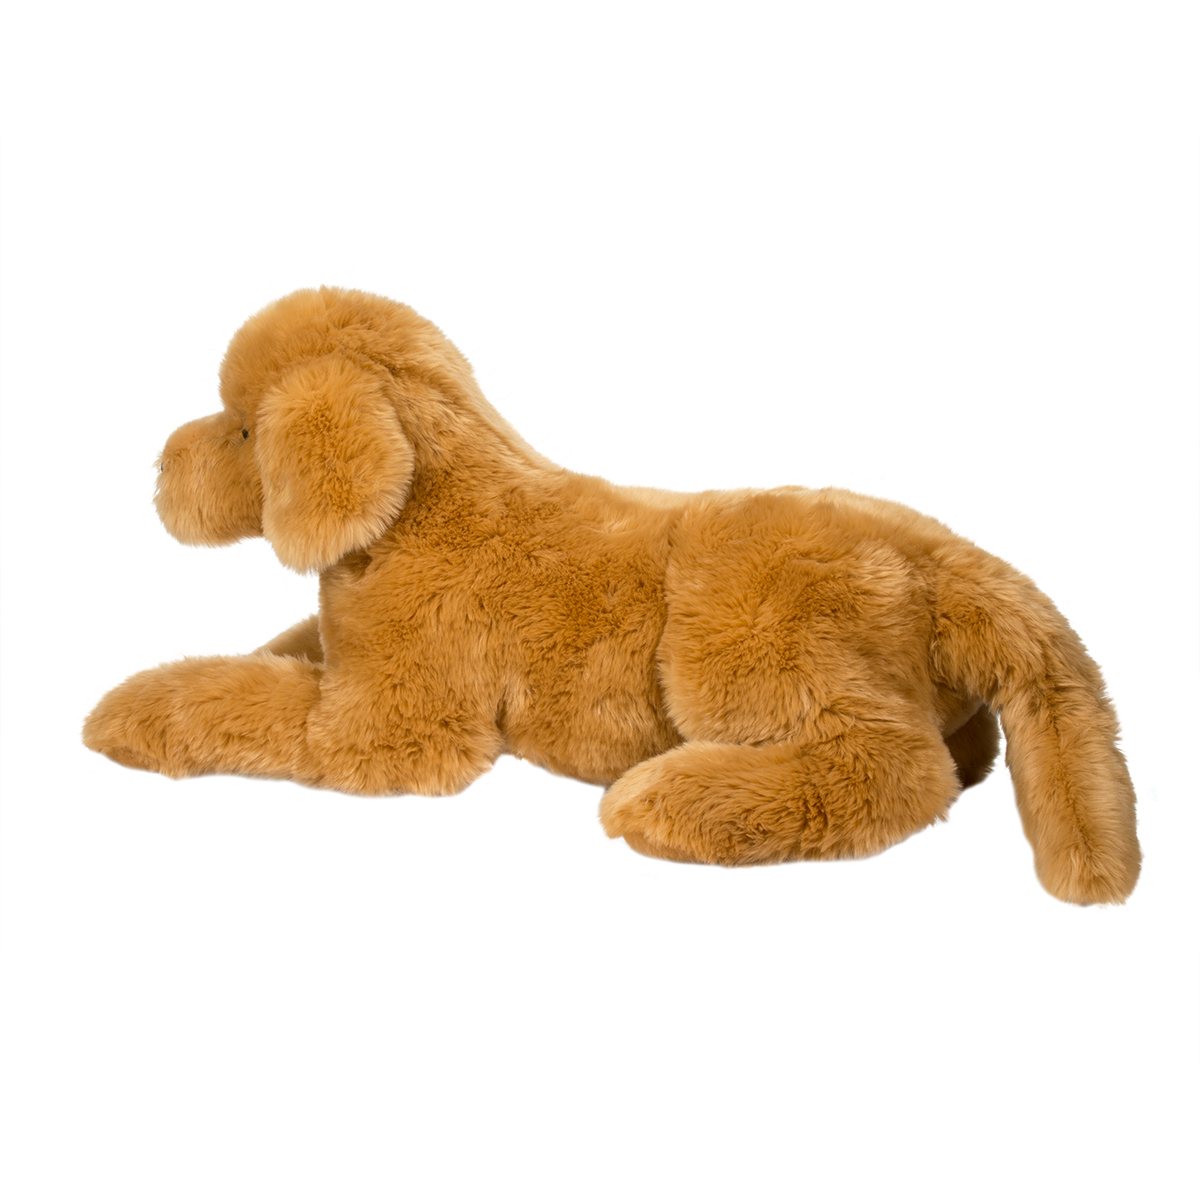 26 Inch Sherman Lying Golden Retriever Dog Plush Stuffed Animal by Douglas for sale online 